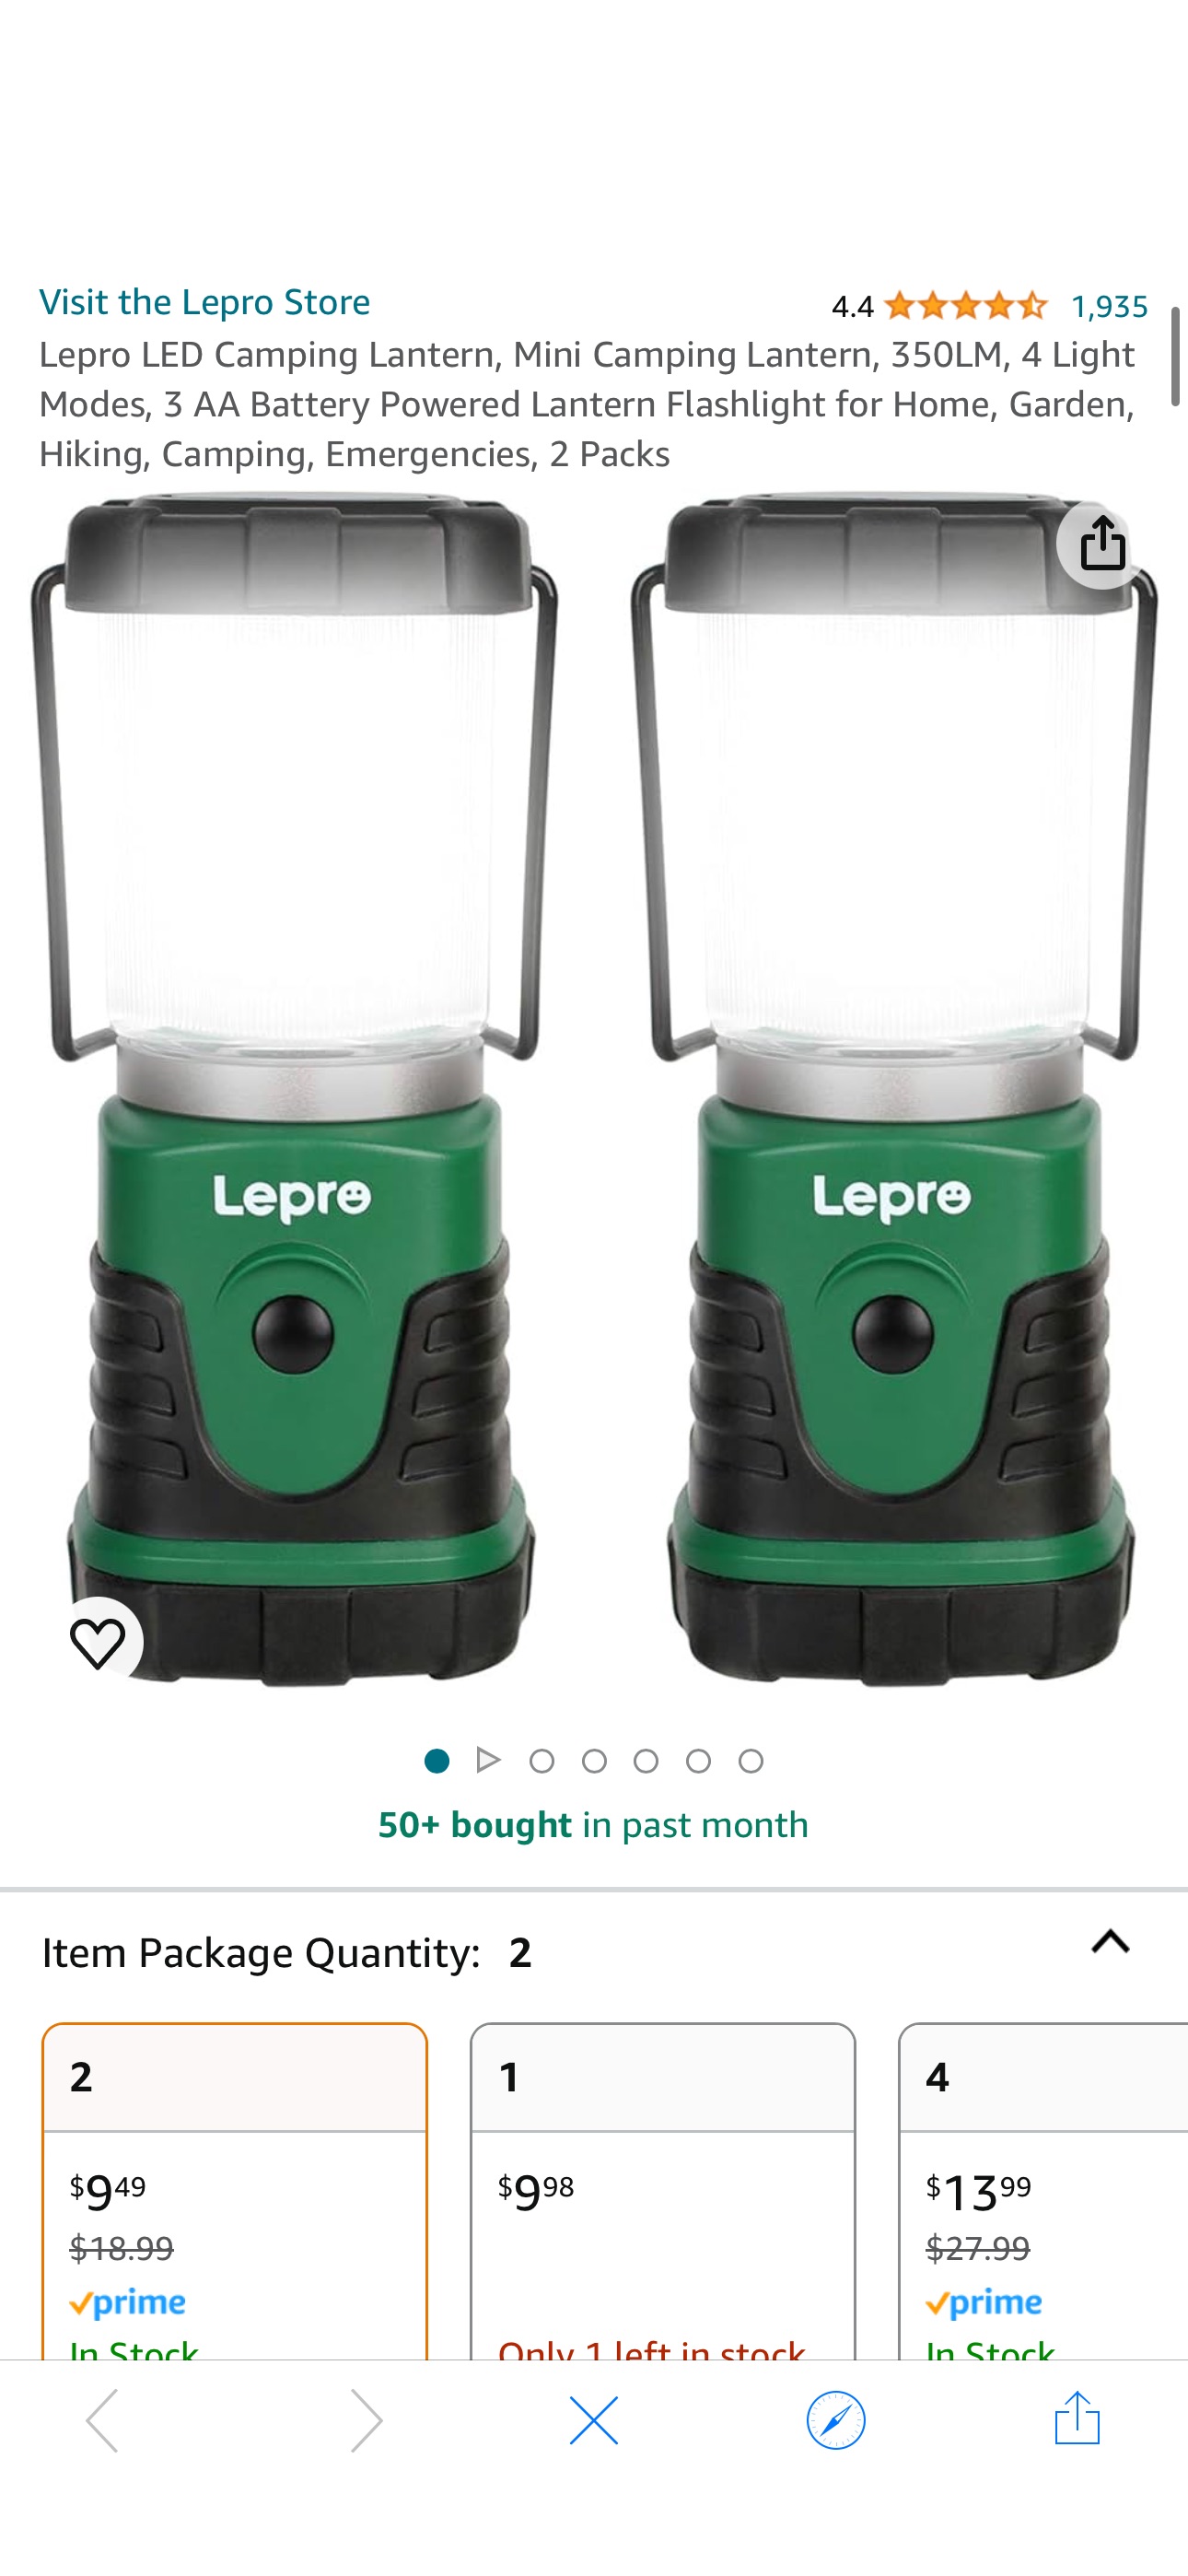 Amazon.com: Lepro LED Camping Lantern, Mini Camping Lantern, 350LM, 4 Light Modes, 3 AA Battery Powered Lantern Flashlight for Home, Garden, Hiking, Camping, Emergencies, 2 Packs : Sports & Outdoors